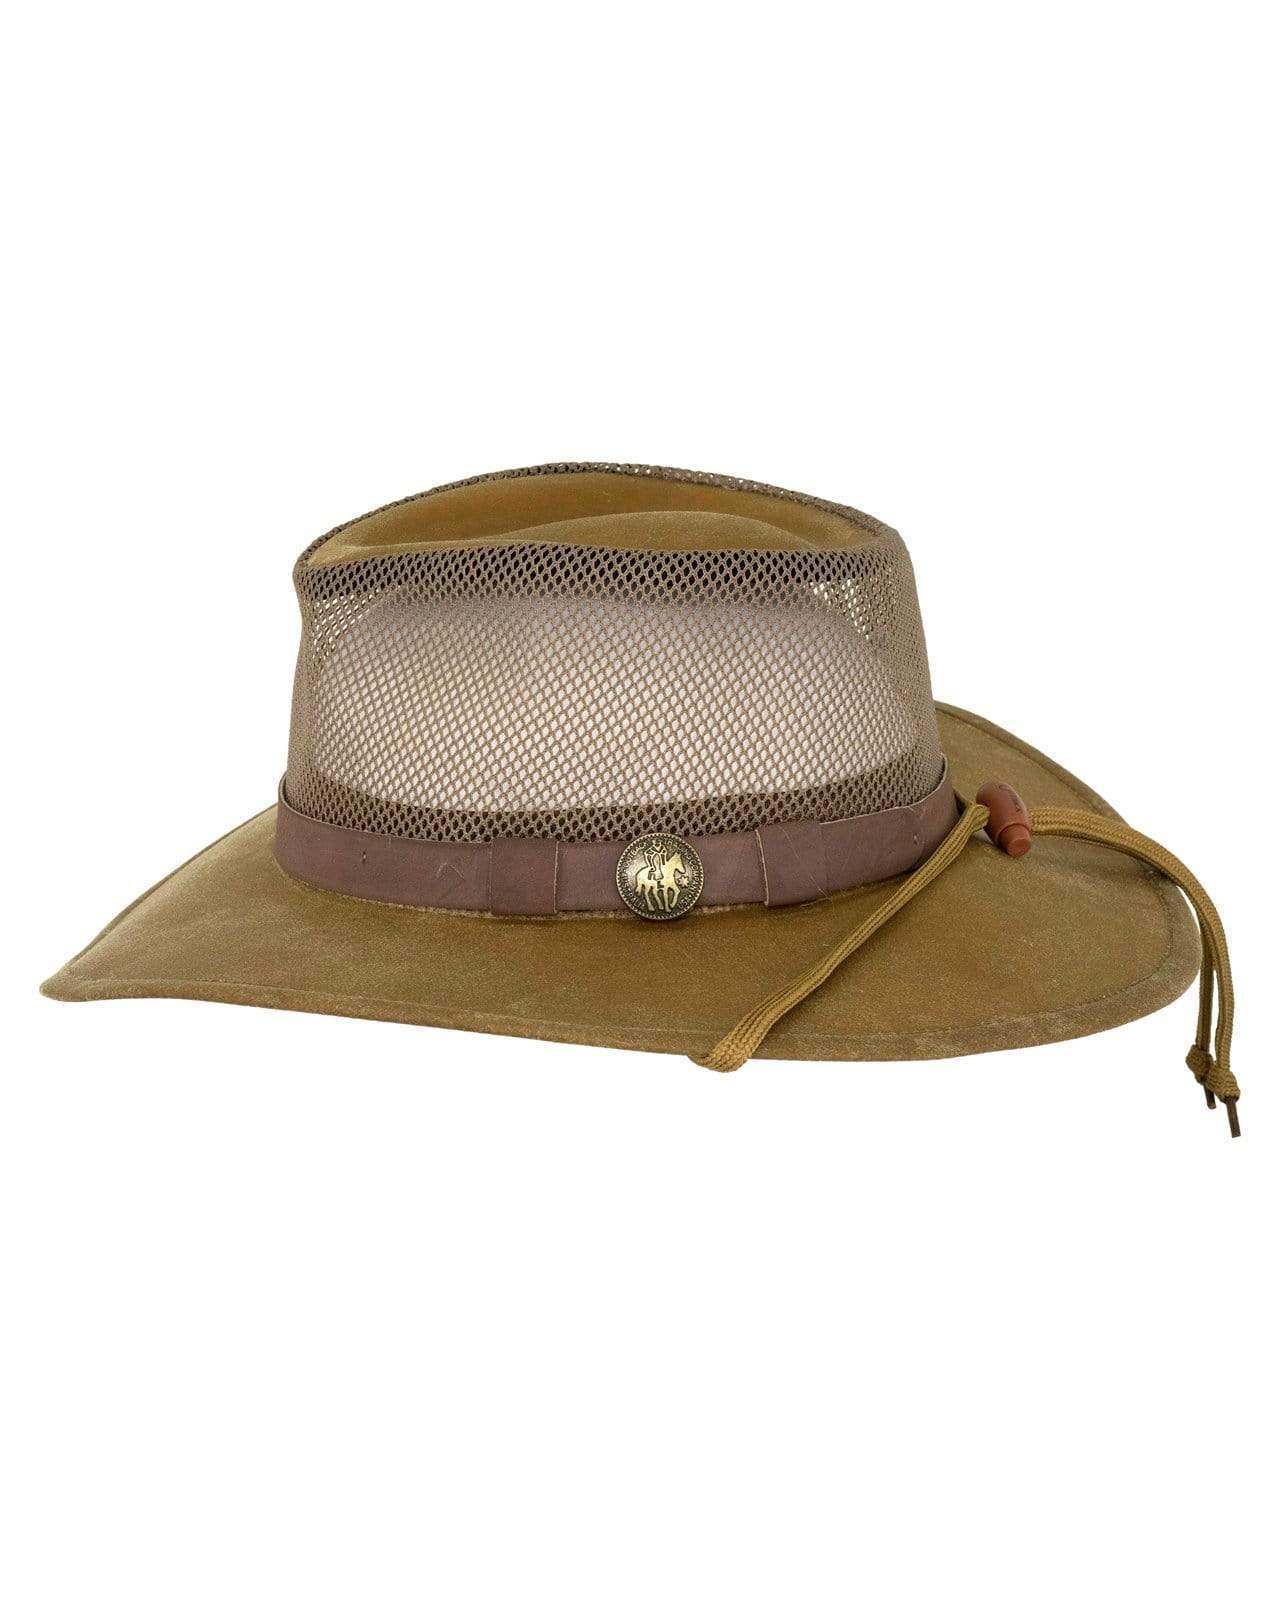 Kodiak with Mesh | Oilskin Hats by Outback Trading Company 